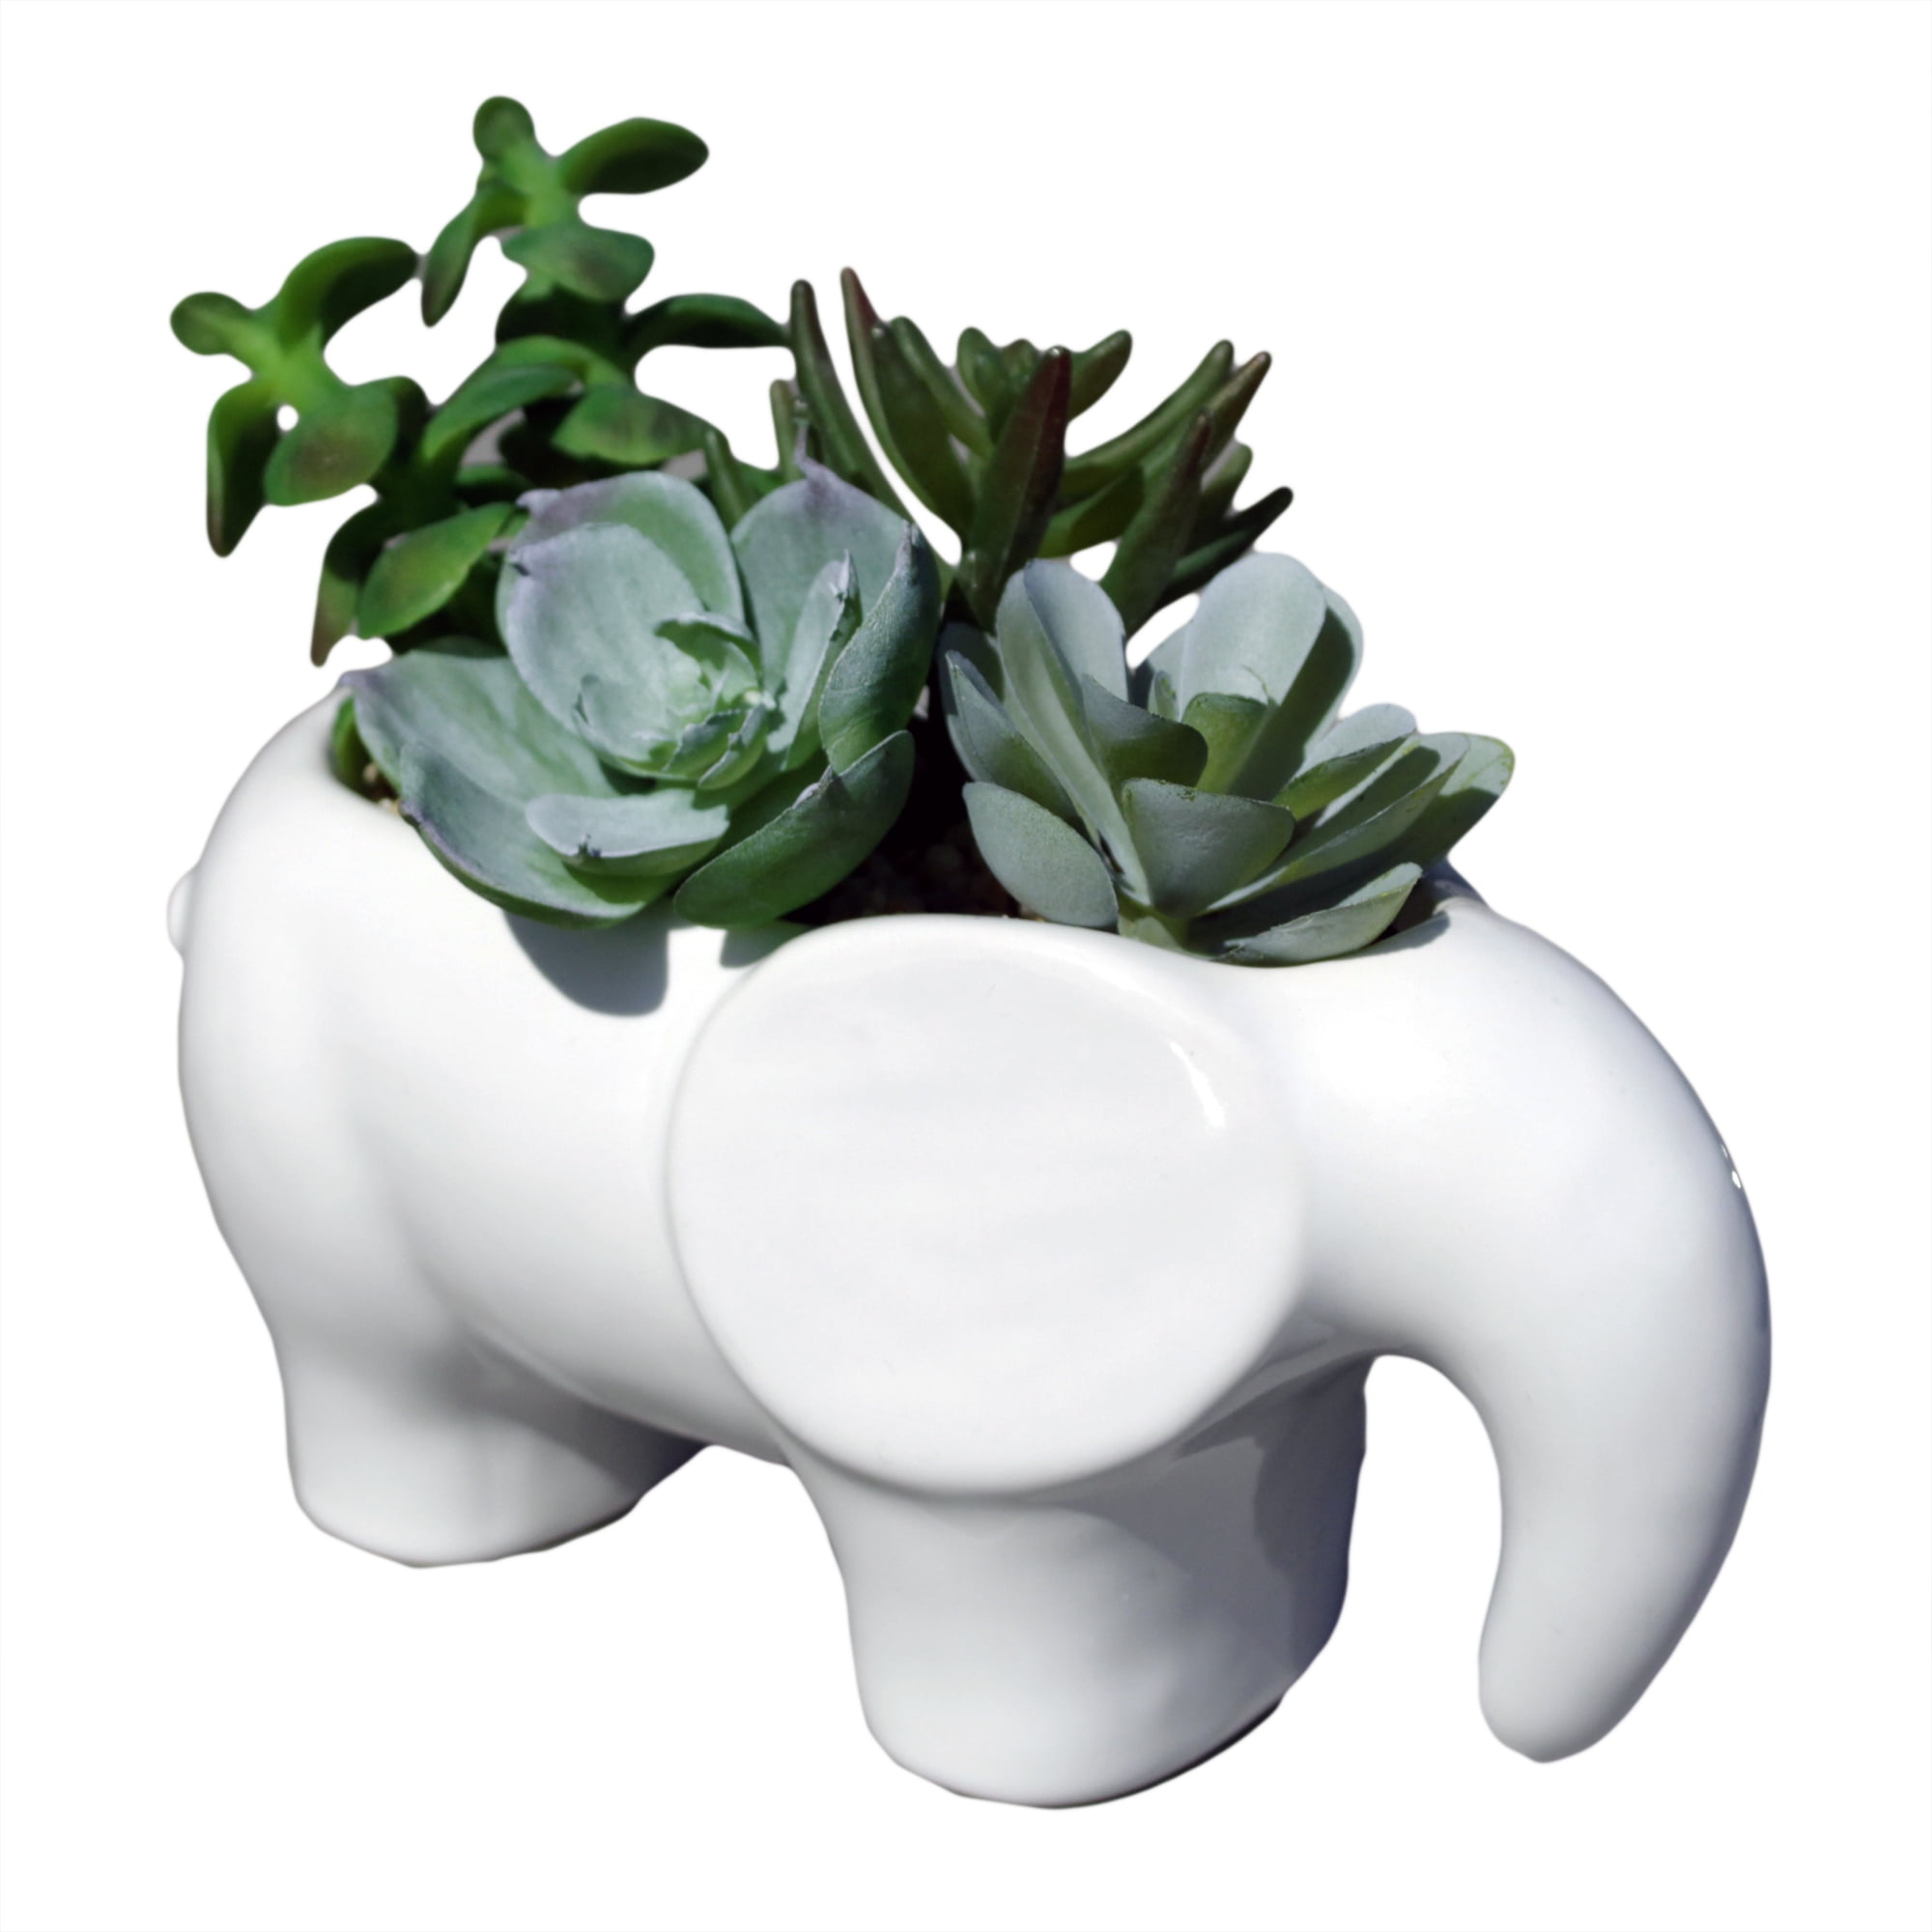 Mainstays 5.2" Artificial Succulent in White Ceramic Elephant Planter (5.2"H x 6.5"L x 3.5"W)